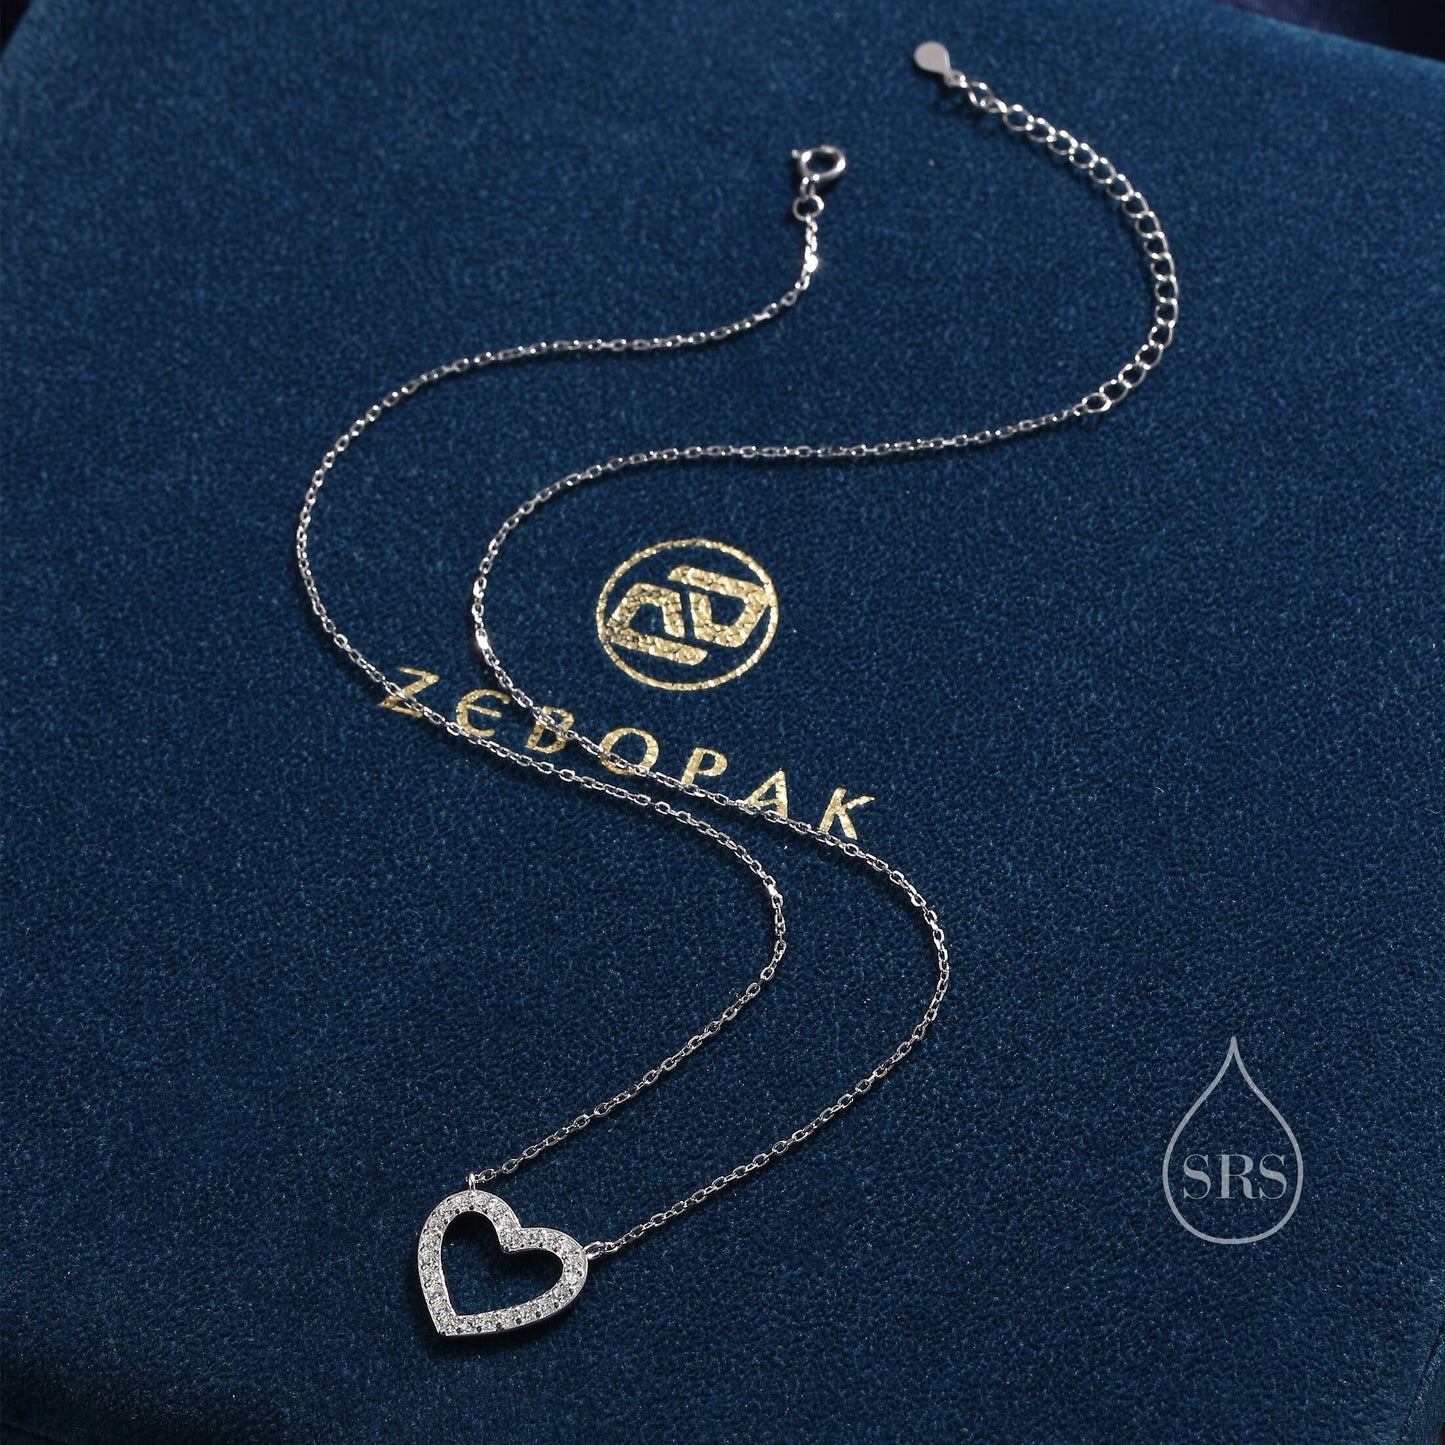 Open Heart CZ Necklace in Sterling Silver, Silver or Gold, Heart Necklace, Sparkly CZ Necklace